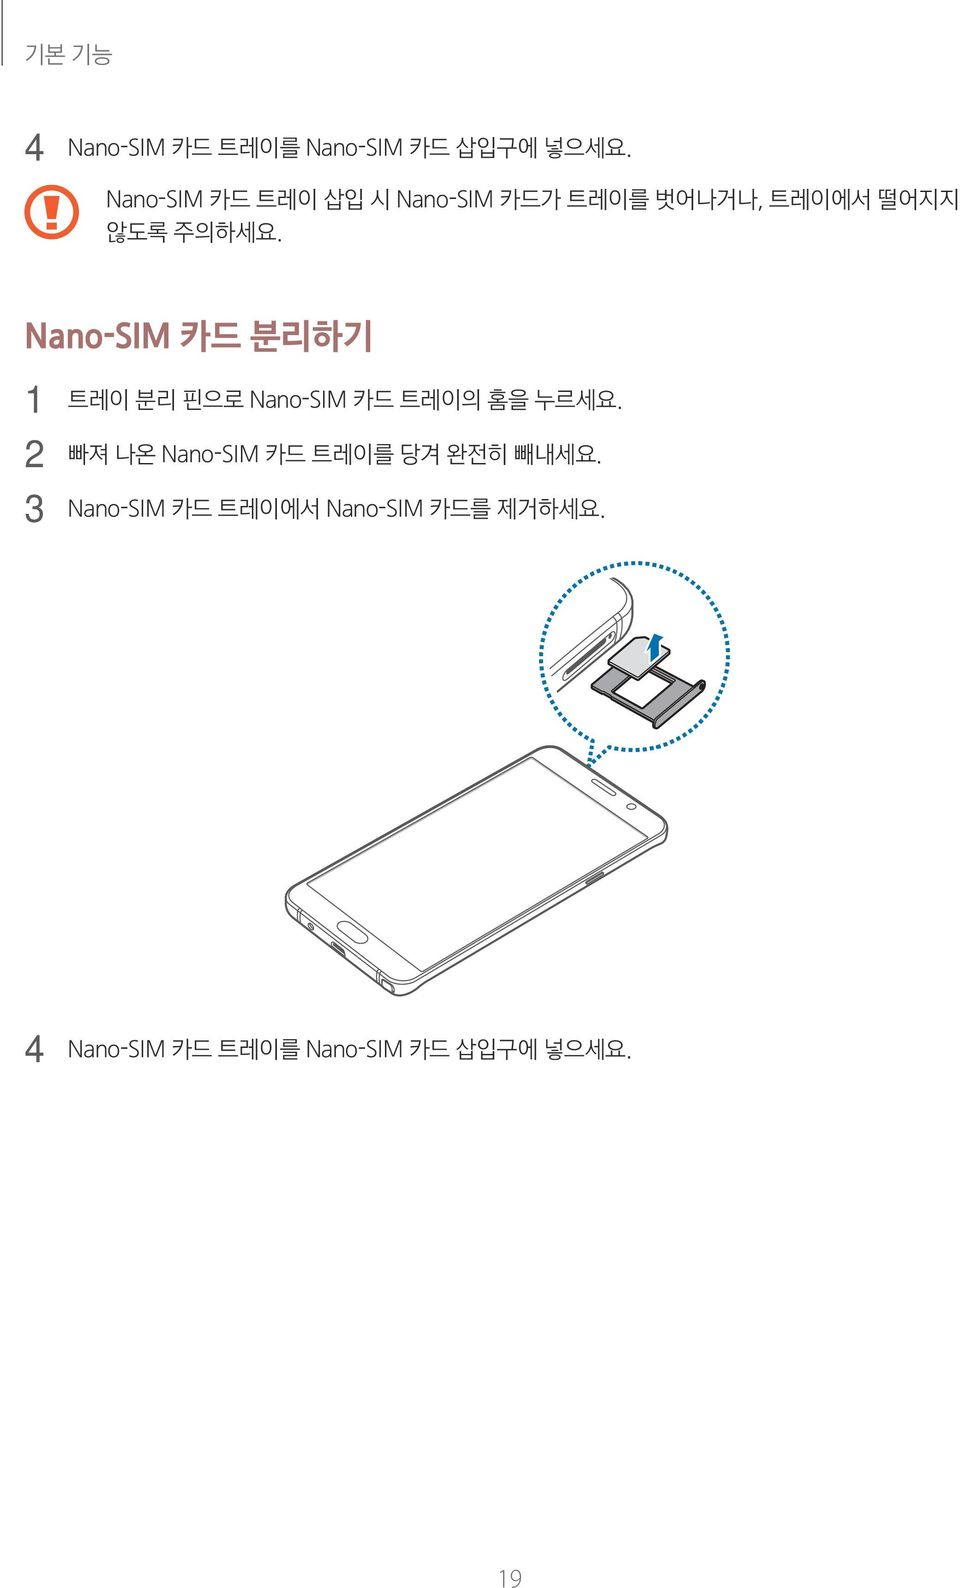 Nano-SIM 카드 분리하기 3 트레이 분리 핀으로 Nano-SIM 카드 트레이의 홈을 누르세요.